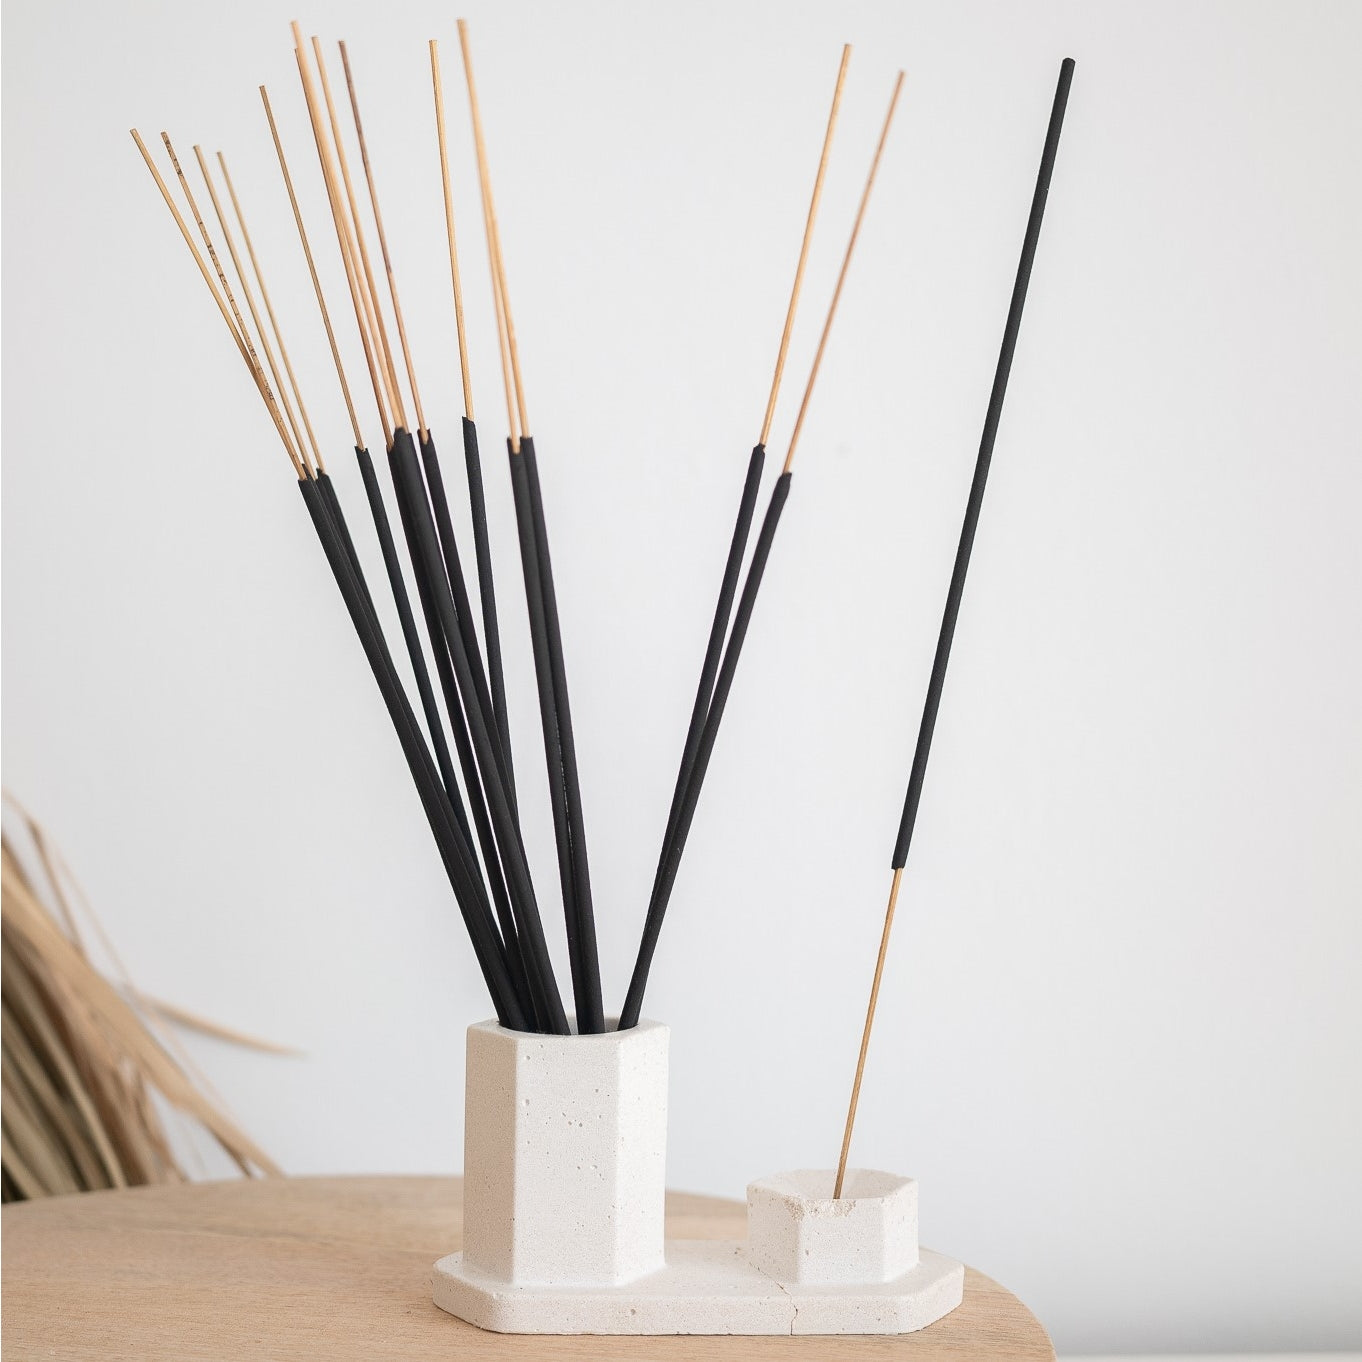 Incense Sticks / Set of 15